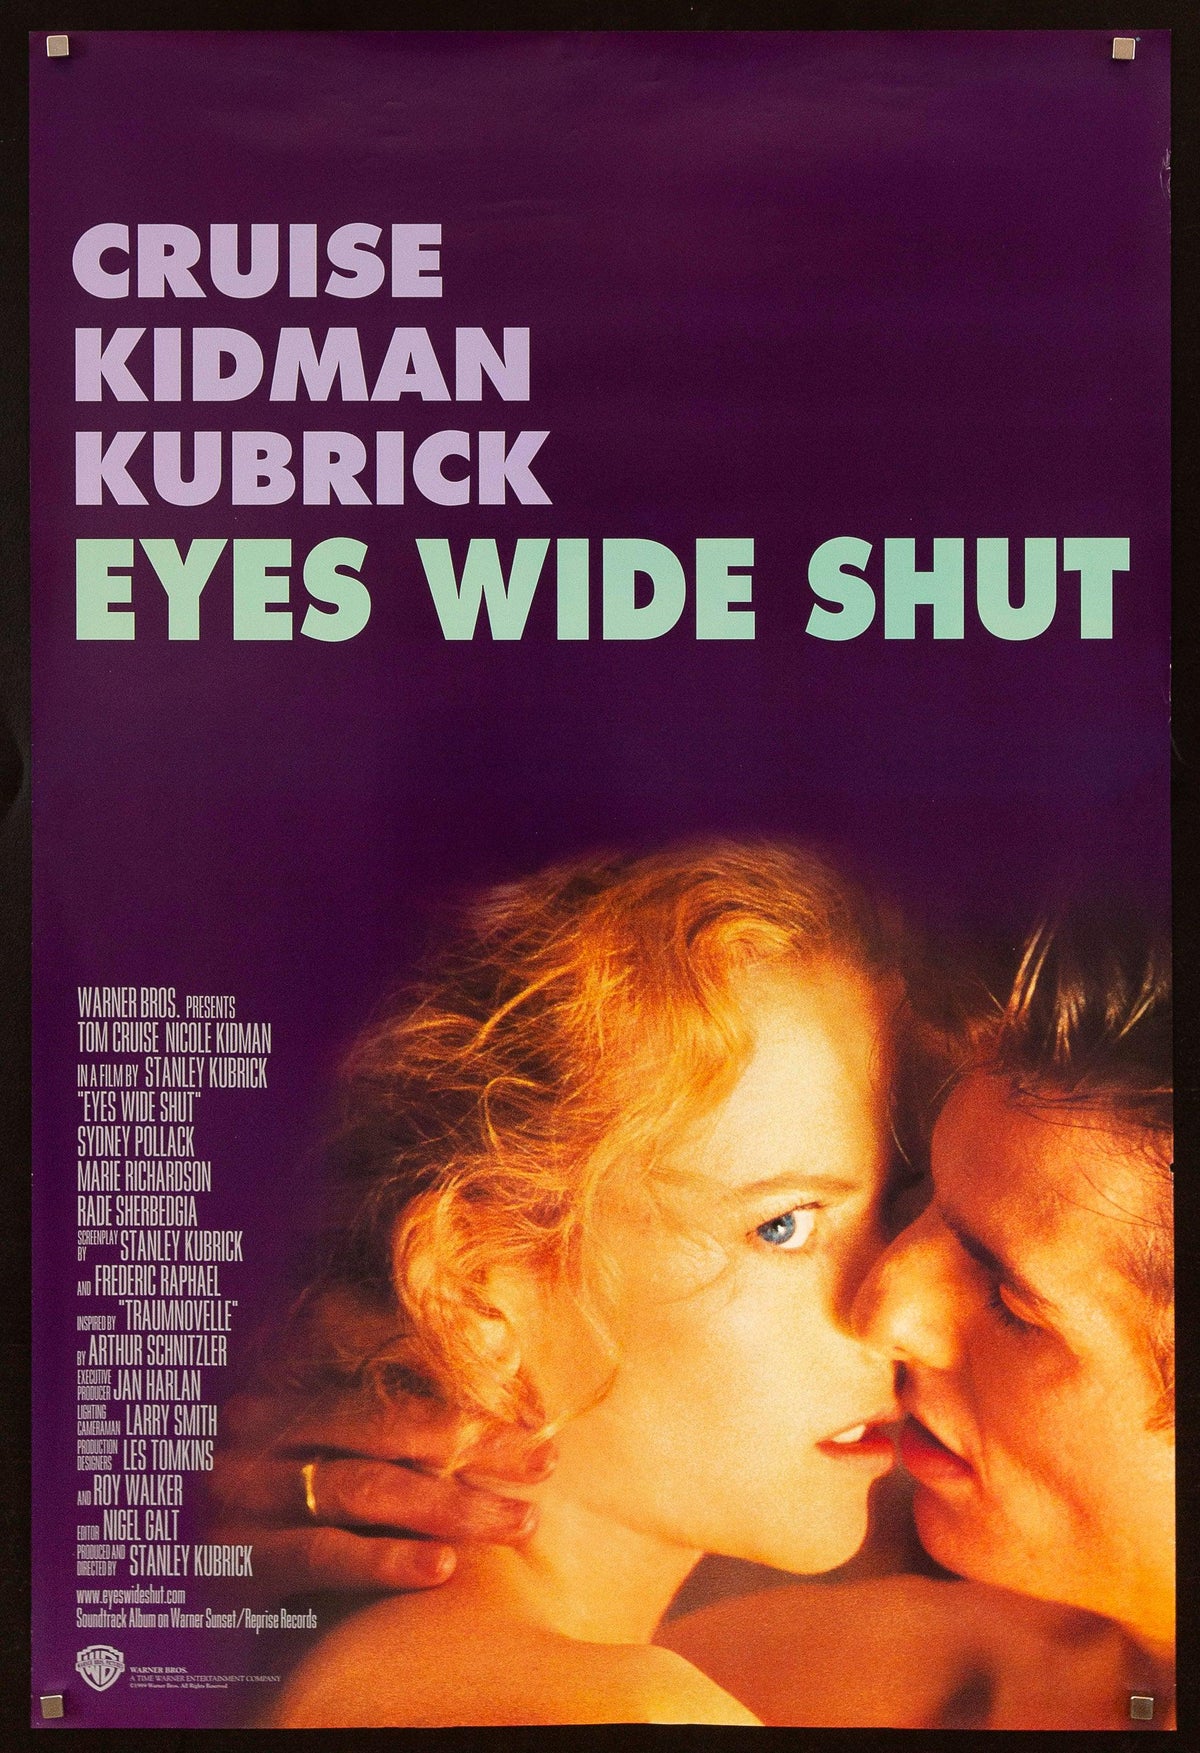 Eyes Wide Shut 1 Sheet (27x41) Original Vintage Movie Poster